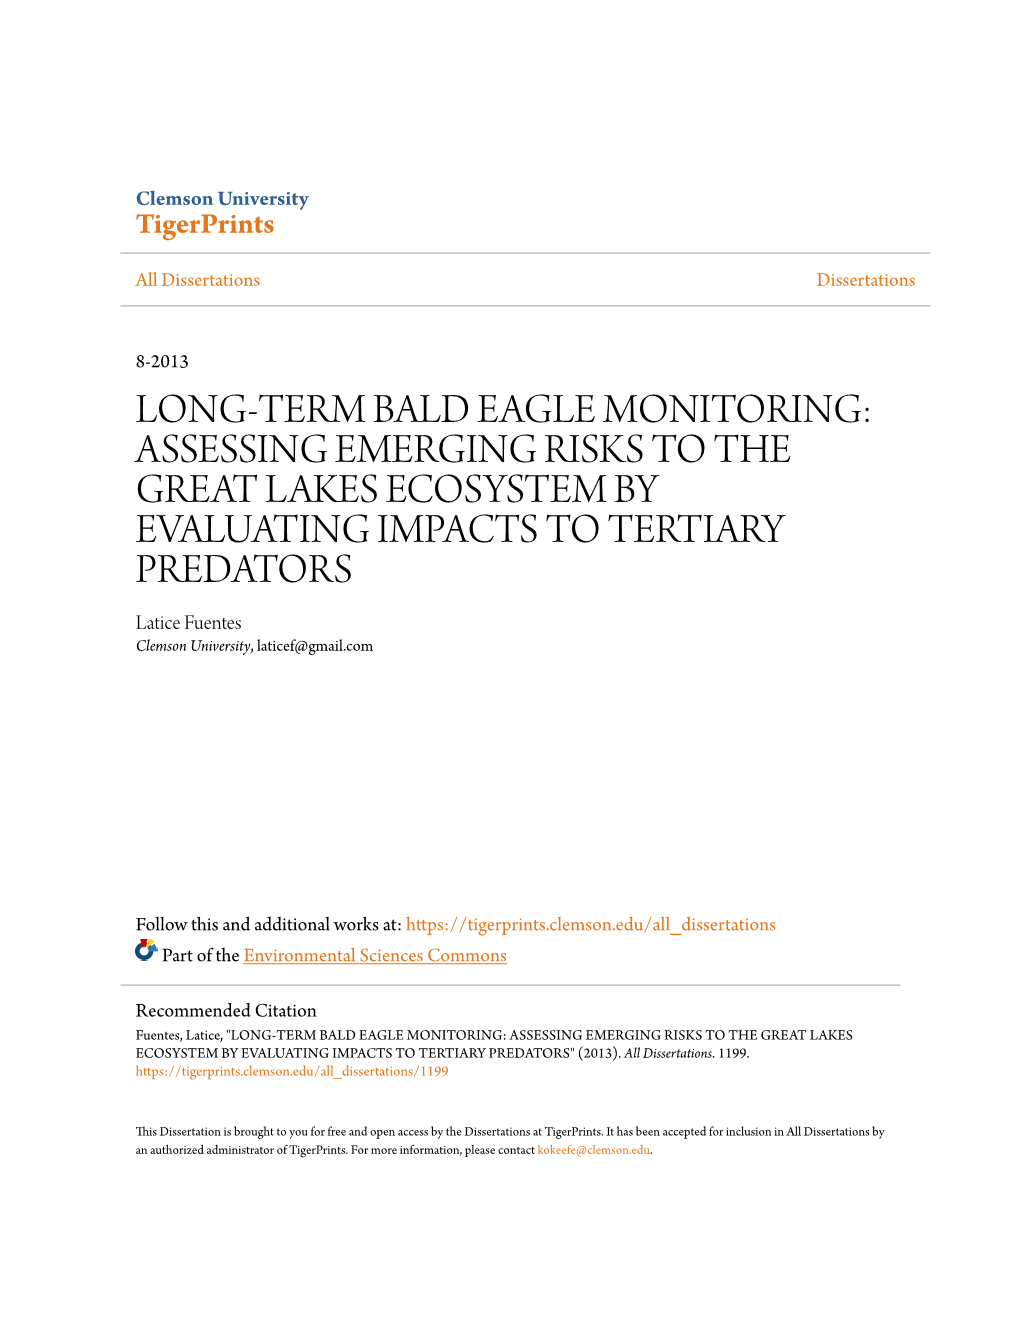 Long-Term Bald Eagle Monitoring